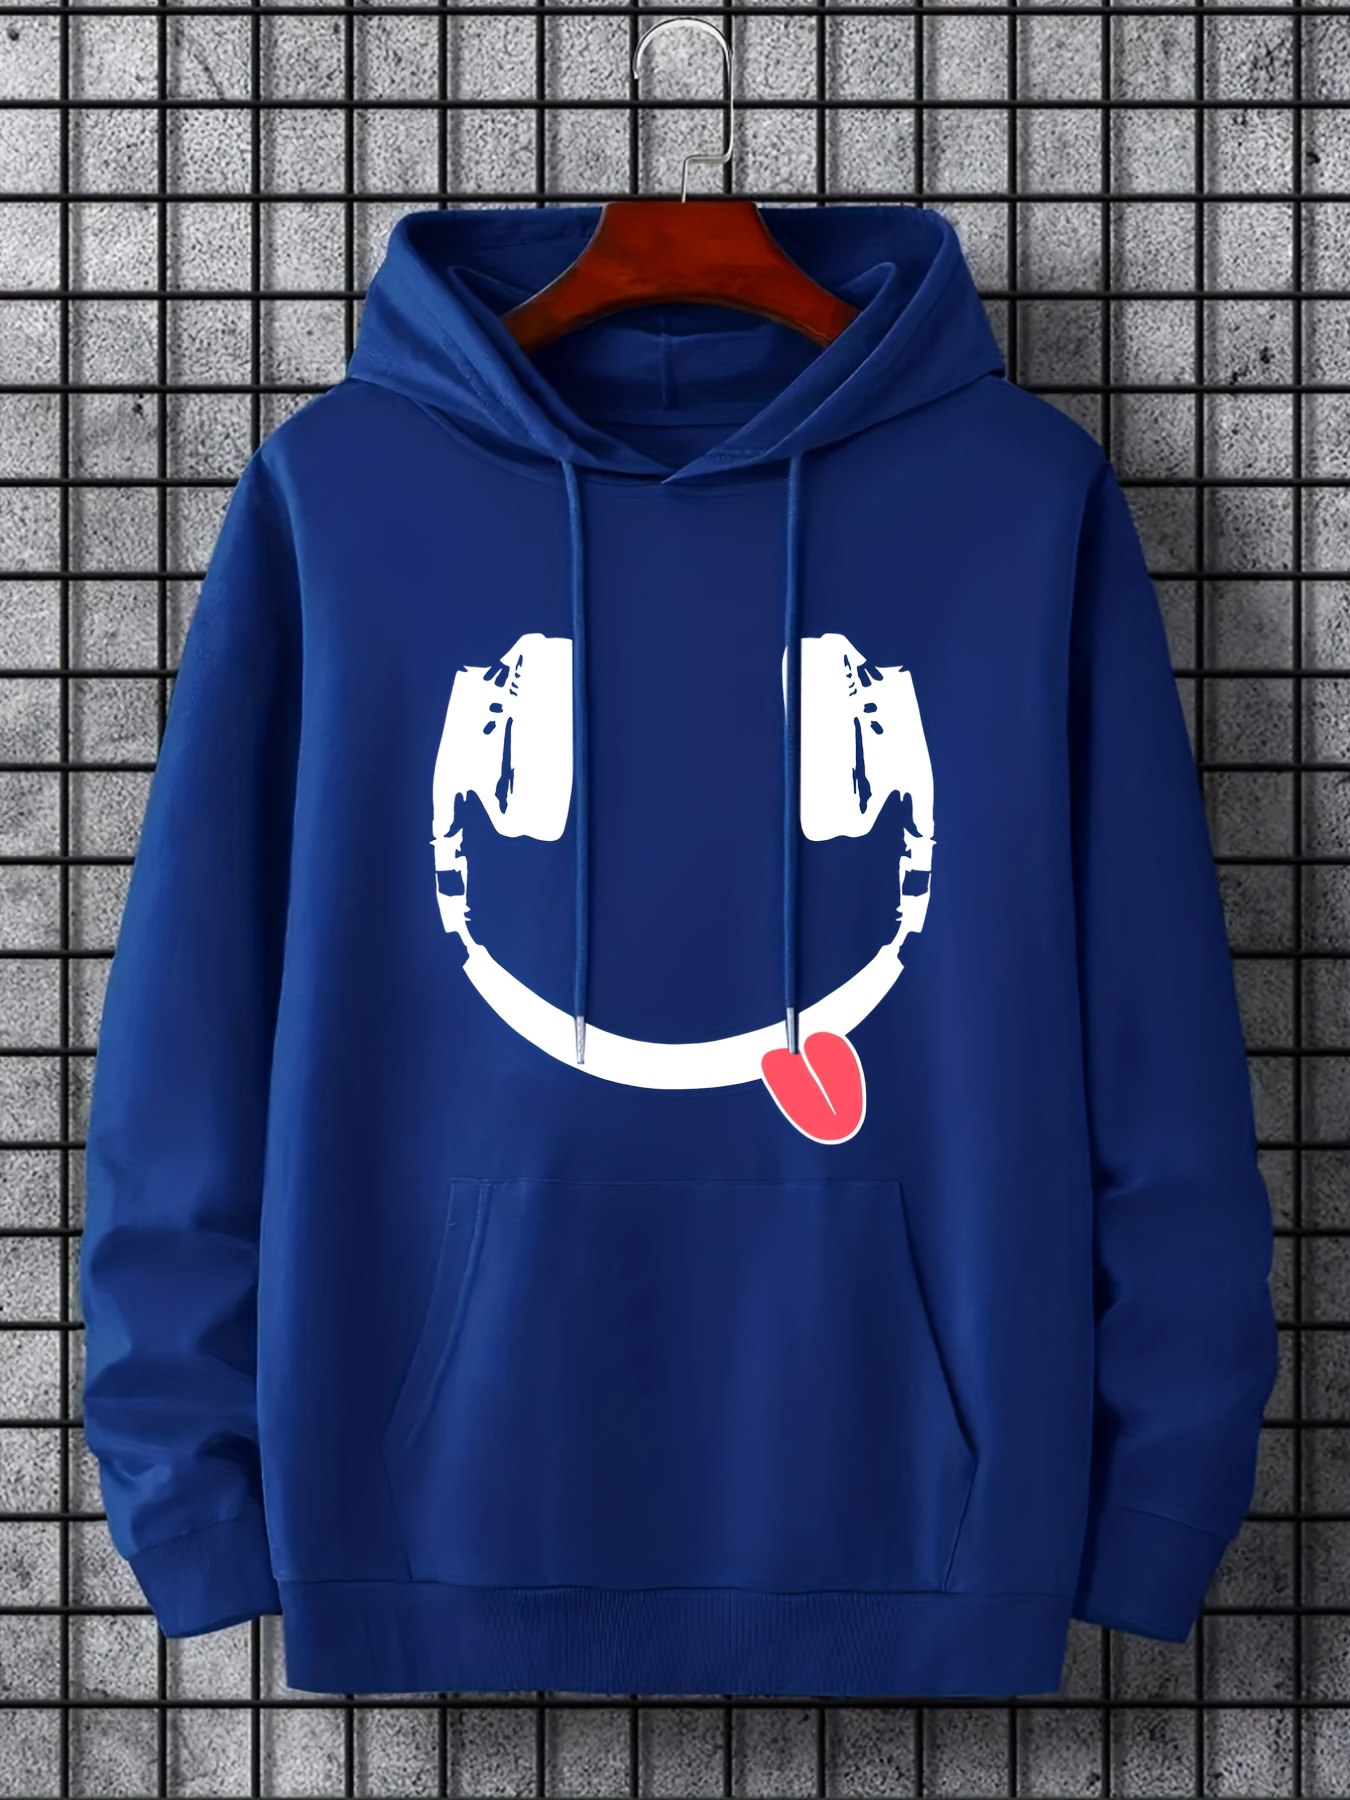 headphone smile print hoodie hoodies for men mens casual graphic design pullover hooded sweatshirt with kangaroo pocket streetwear for winter fall as gifts details 5